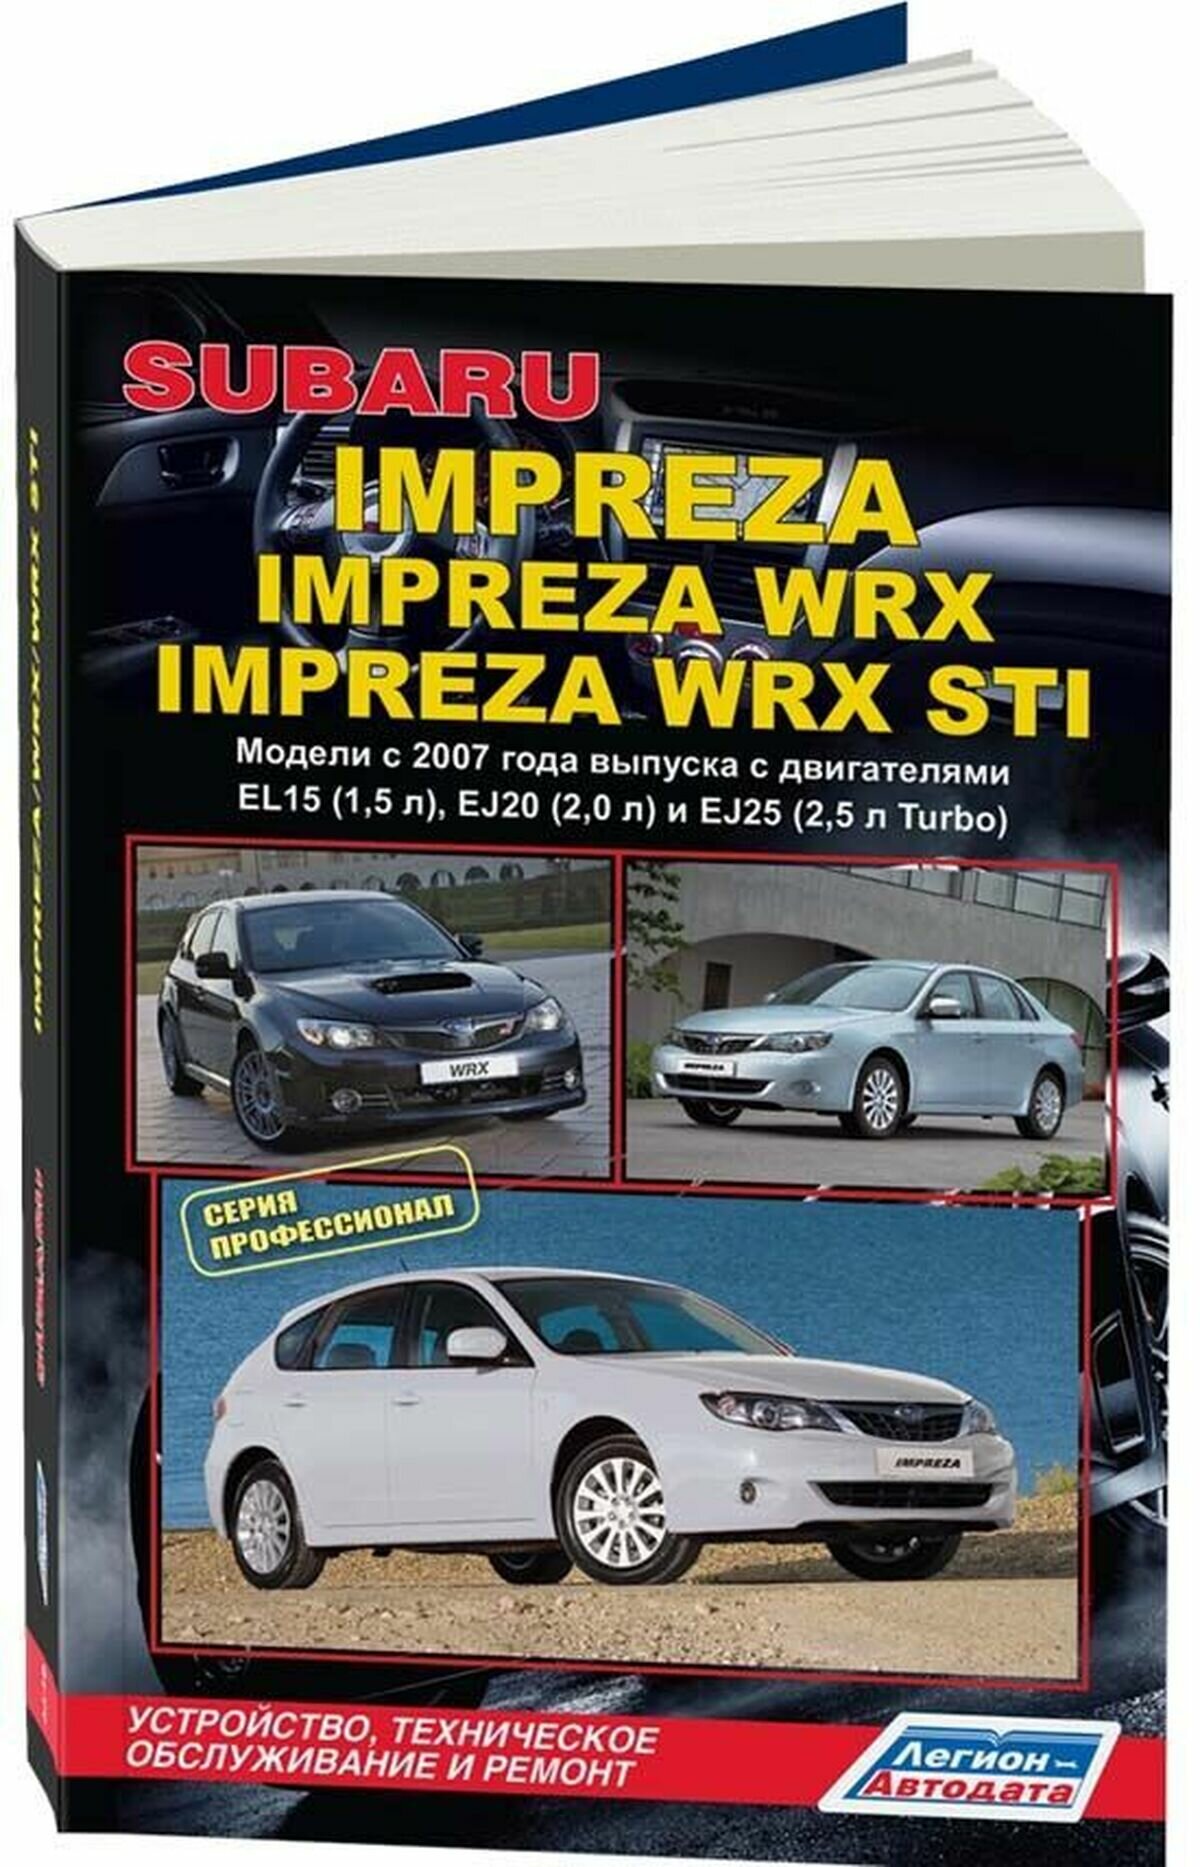 Subaru Impreza: Impreza WRX Impreza WRX STI. Модели c 2007 года выпуска с двигателями EL15 (1,5 л.), EJ20 (2,0 л.), EJ25 (2,5 л. Turbo). Устройство, техническое обслуживание и ремонт - фото №1